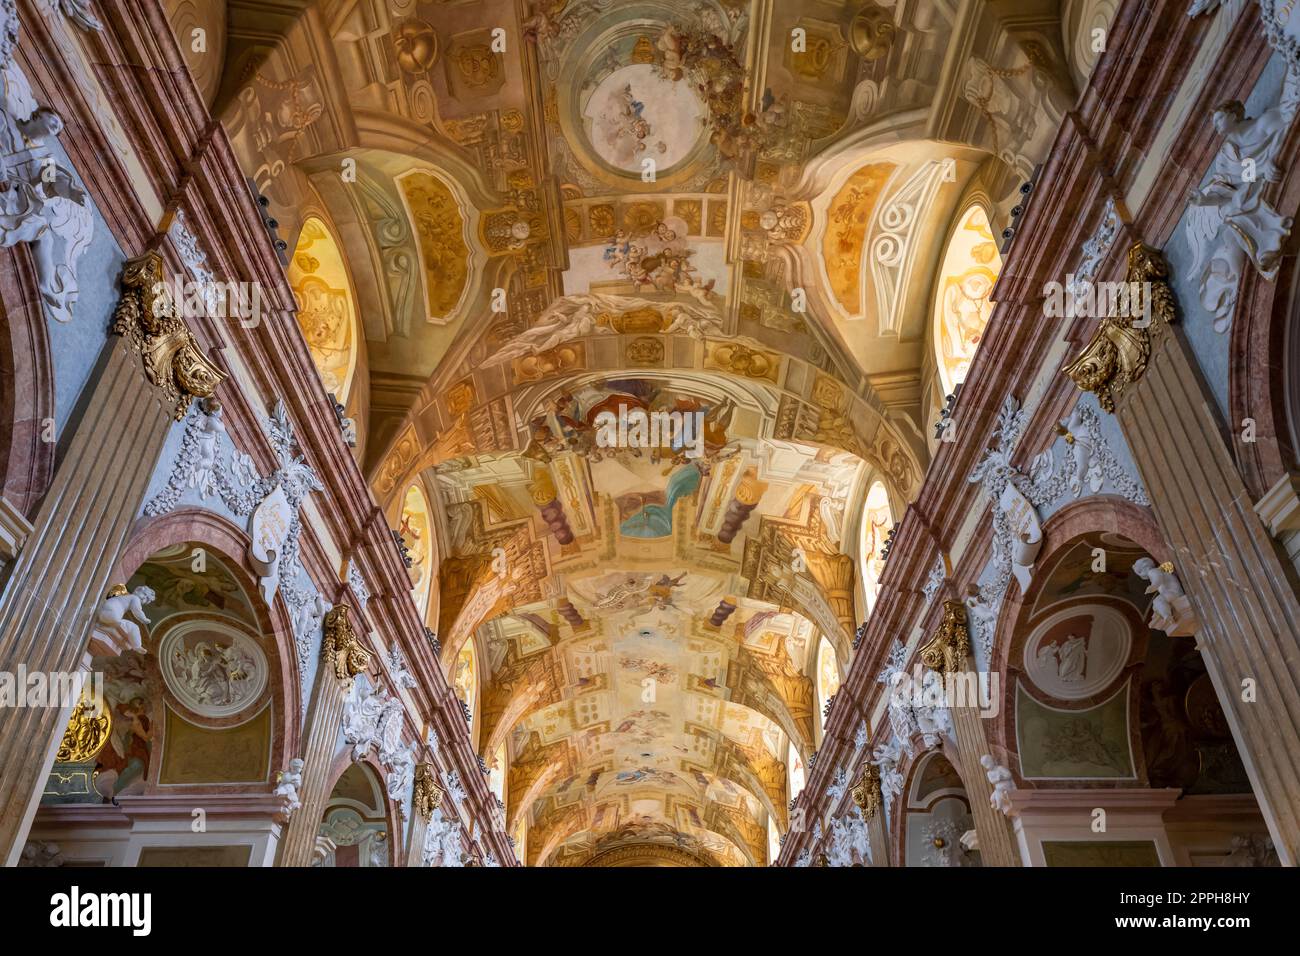 Basilica of Assumption of Mary and Saint Cyrillus and Methodius, Velehrad, Czech Republic Stock Photo